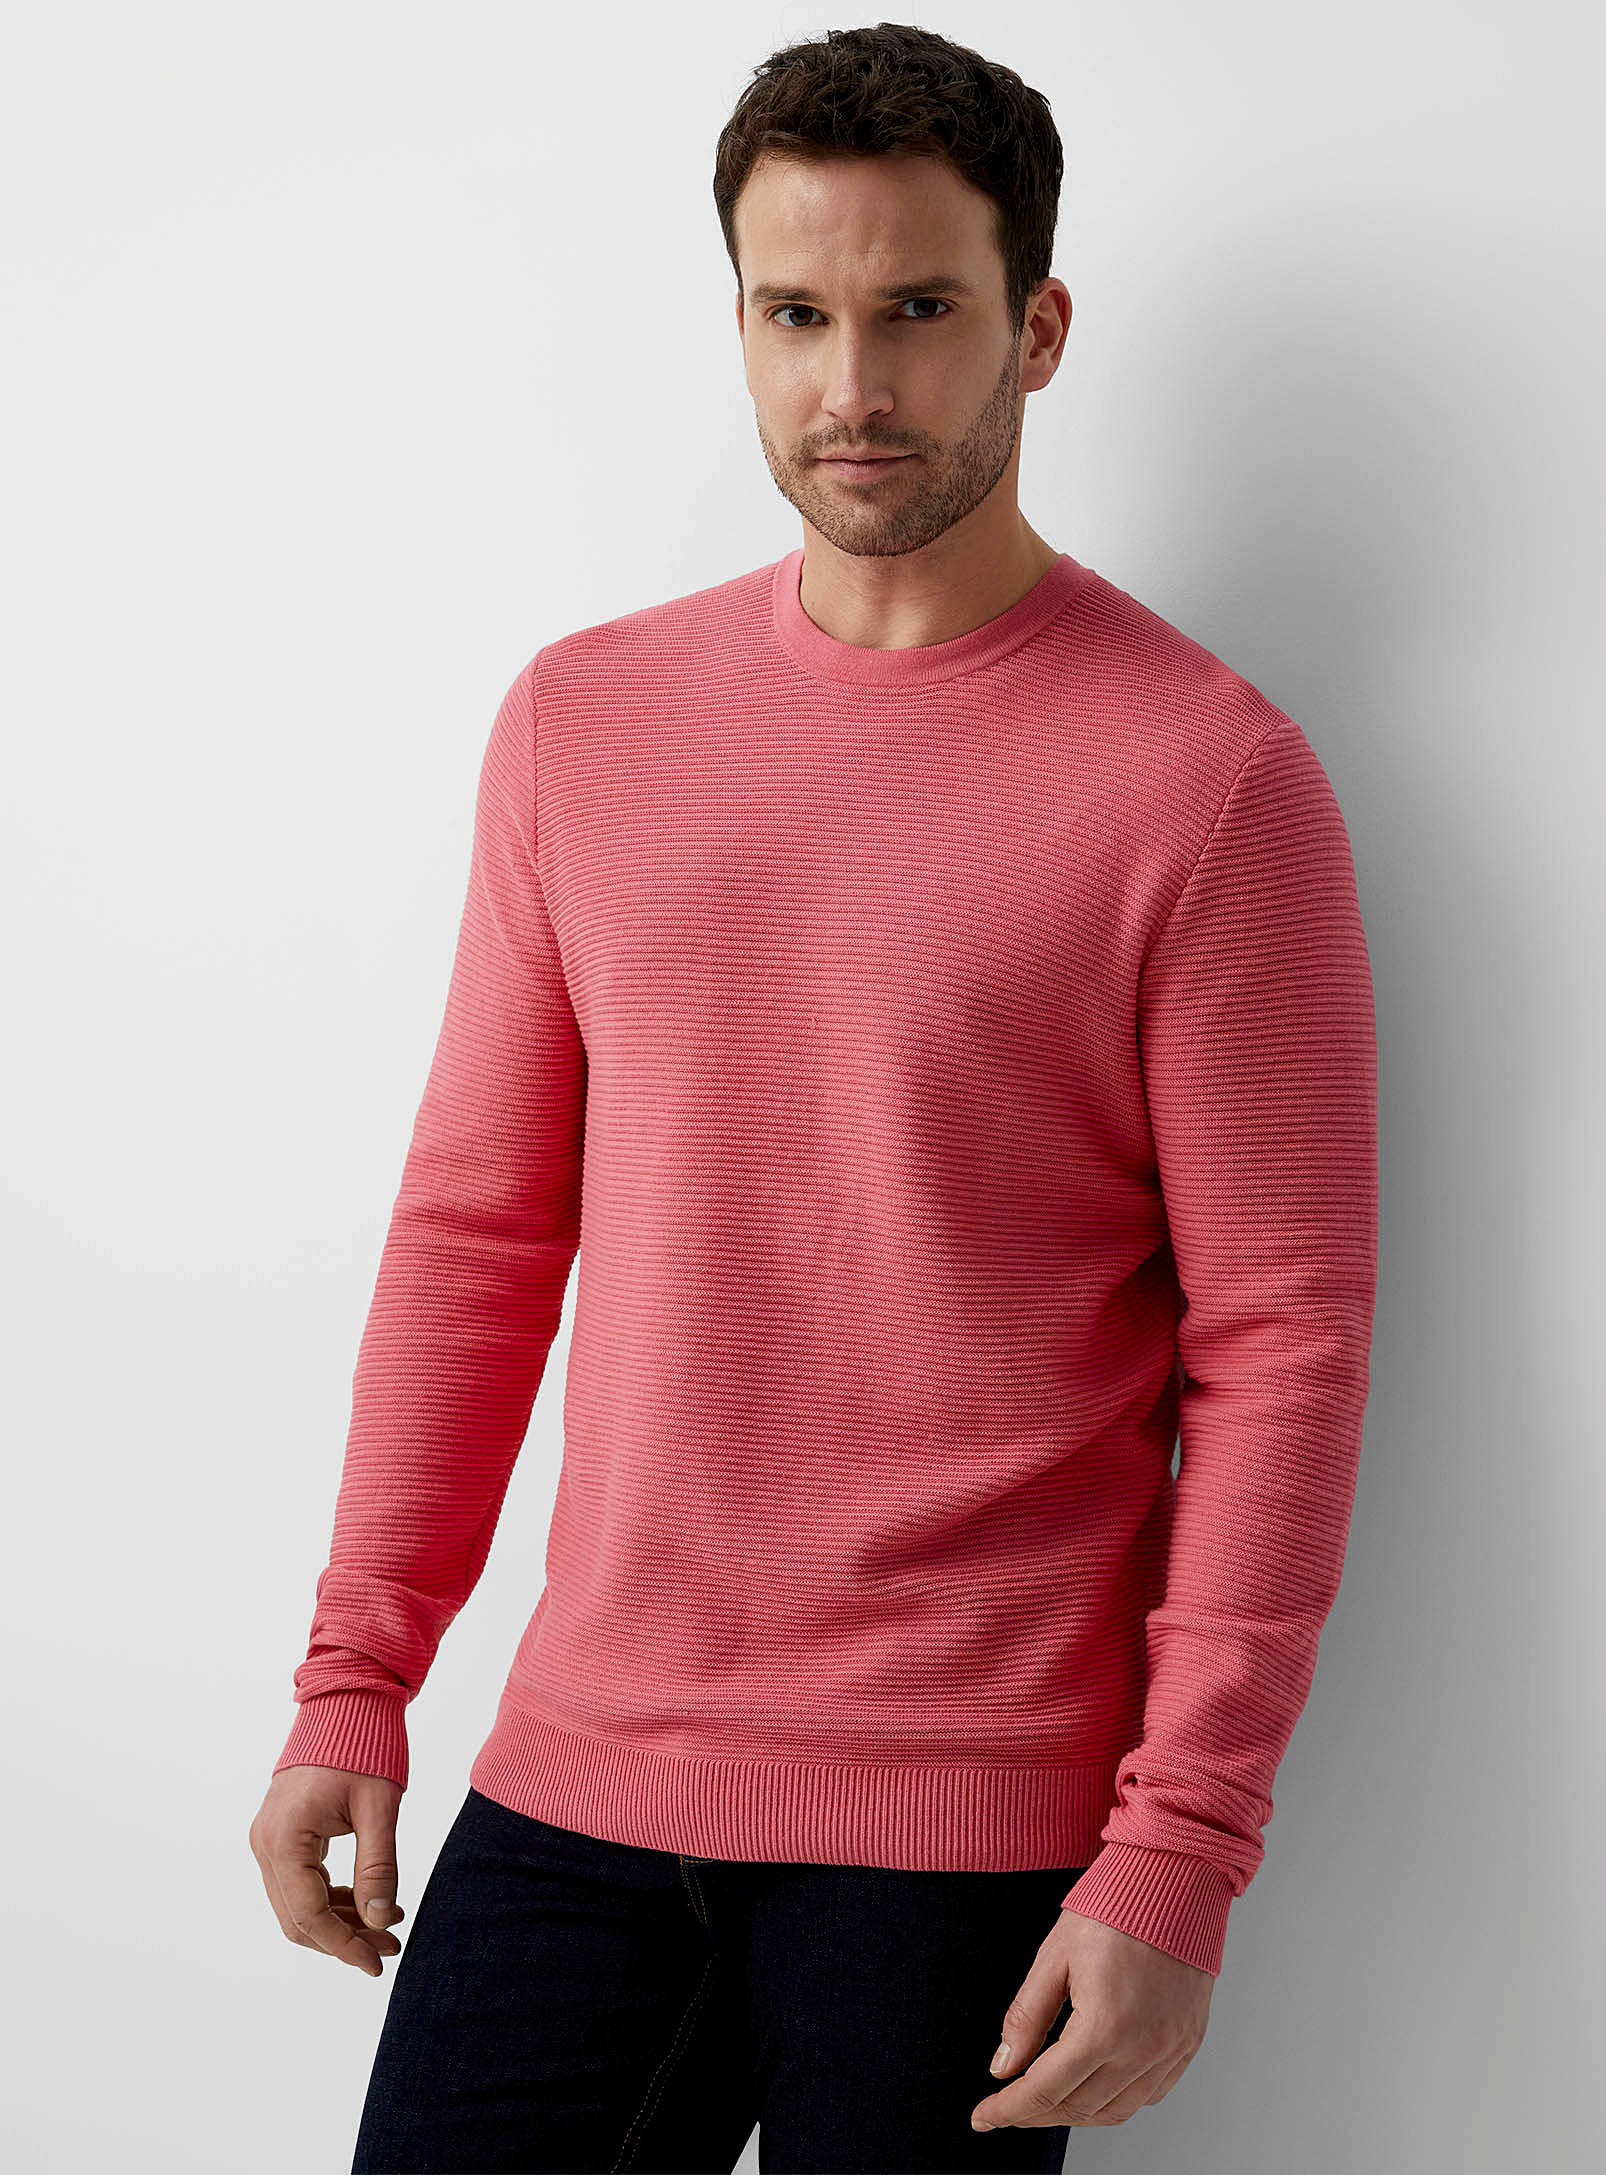 Le 31 Ottoman Stripe Sweater In Pink